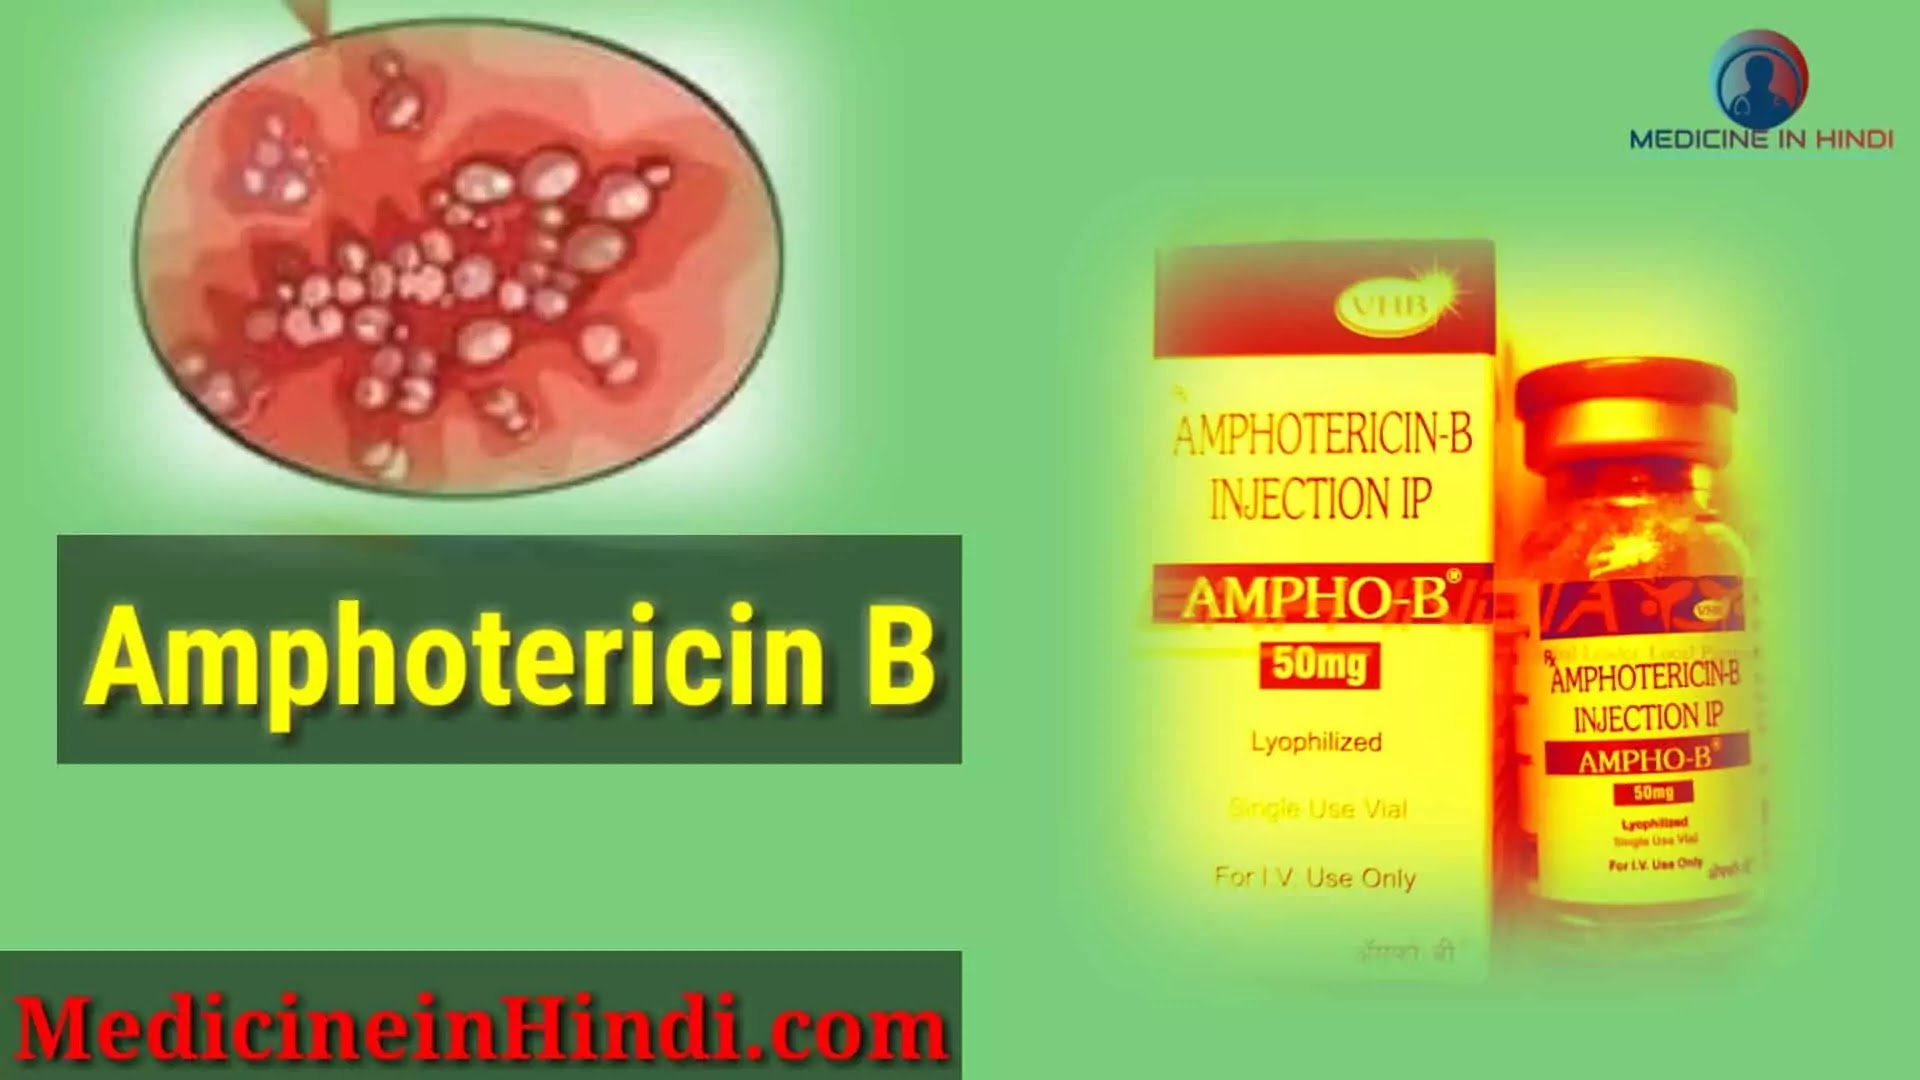 Ampho B 50mg Injection In HINDI | Amphotericin B injection uses In Hindi |